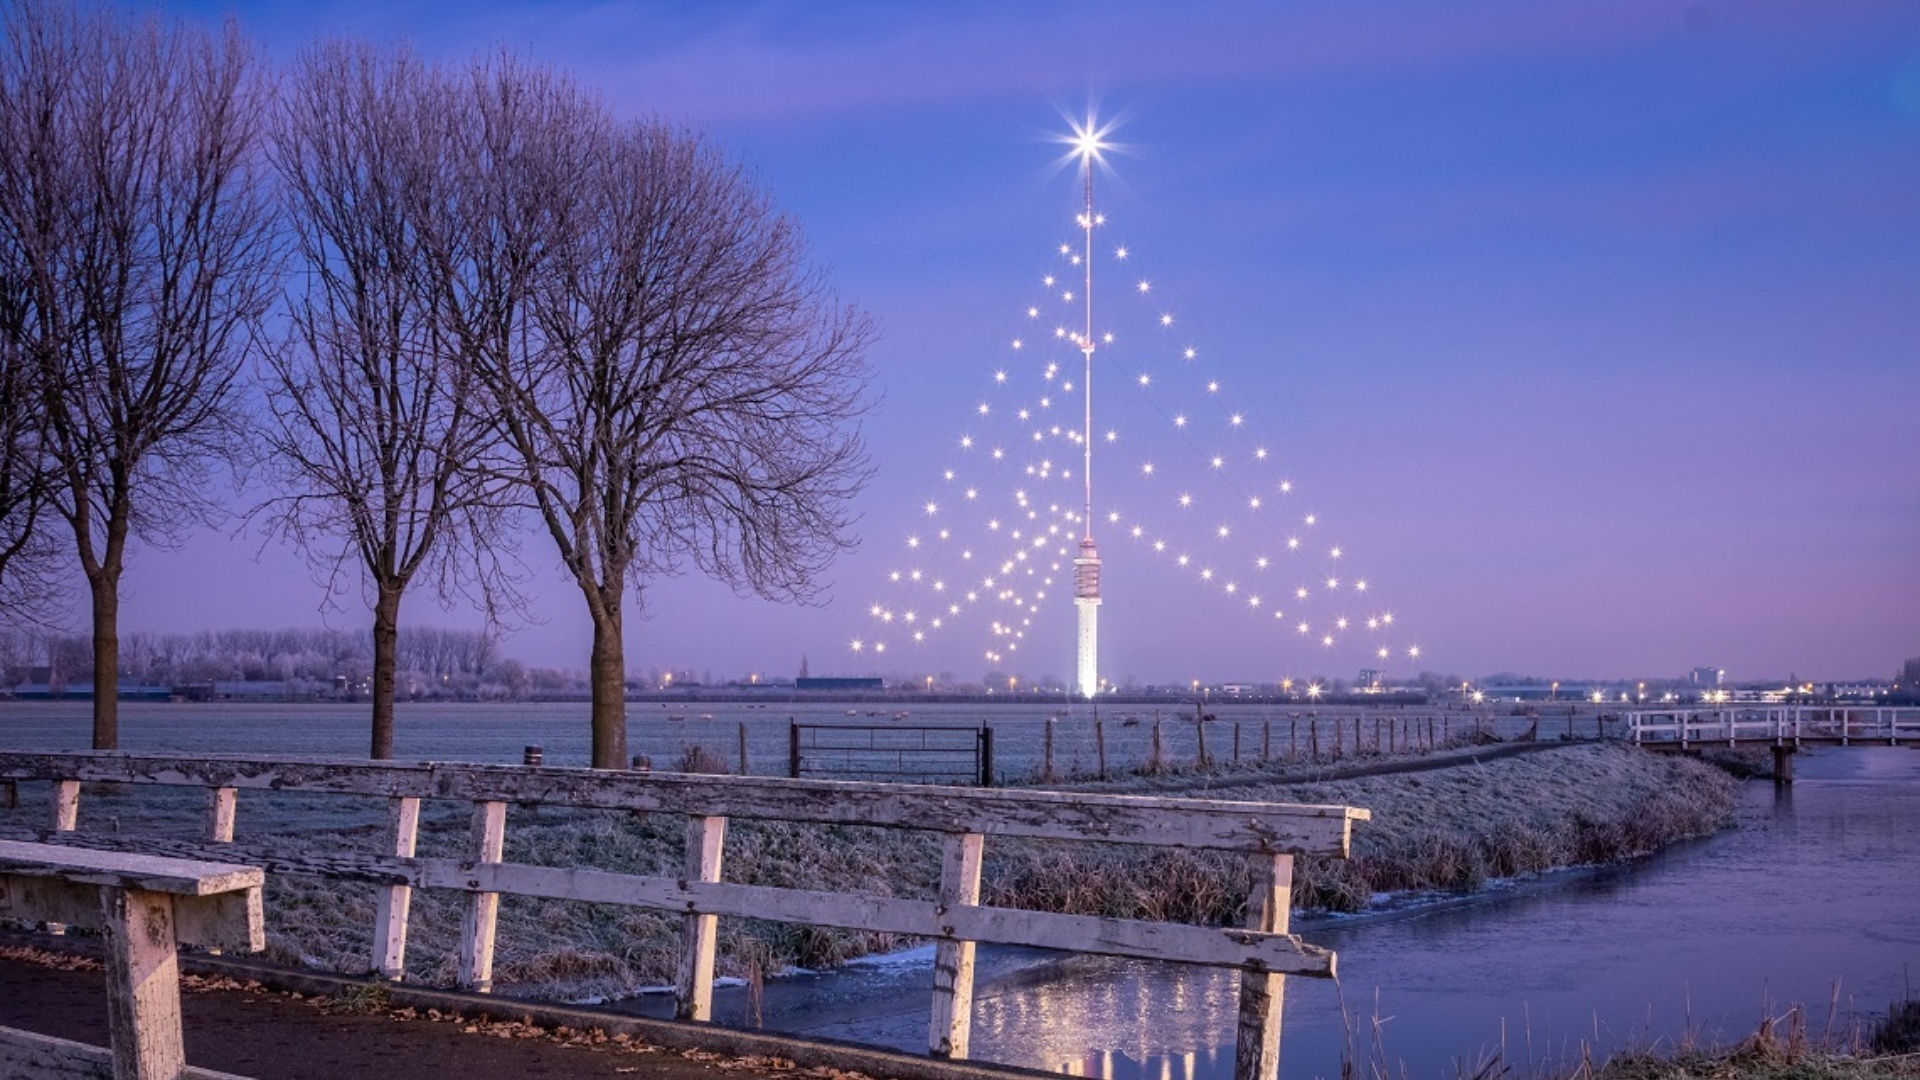 tweede-prijs-grootste-kerstboom-foto-jan-timmer-photography-lr.jpg